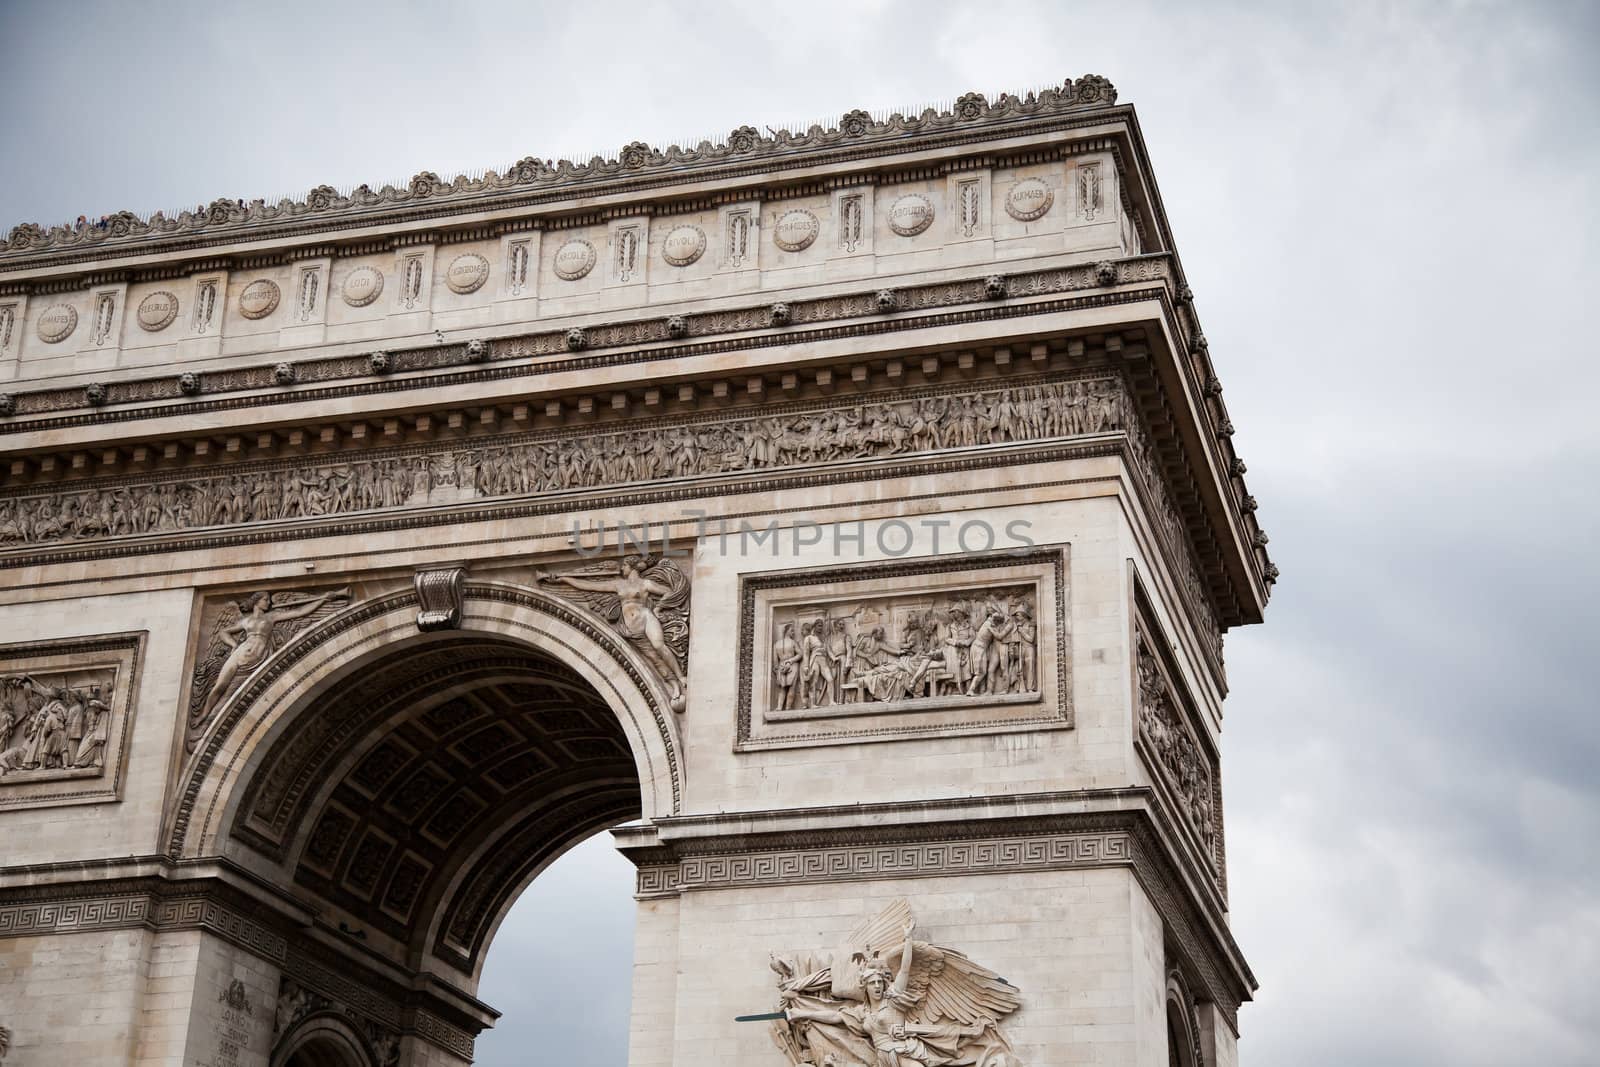 Arc de Triomphe (Arch of Triumph) by furzyk73